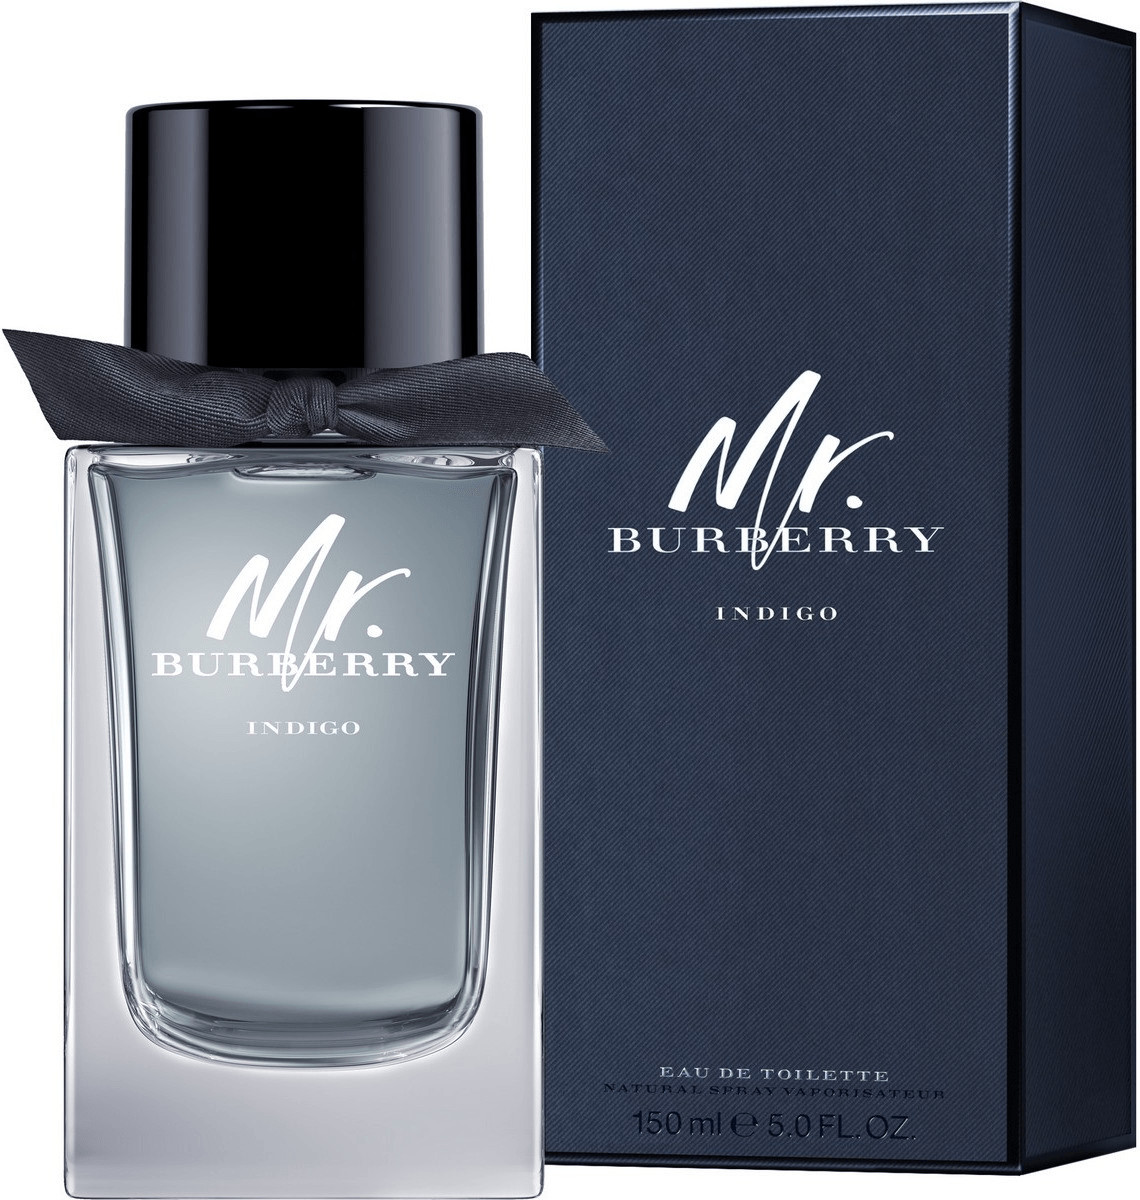 Photos - Men's Fragrance Burberry Mr.  Indigo Eau de Toilette  (150ml)